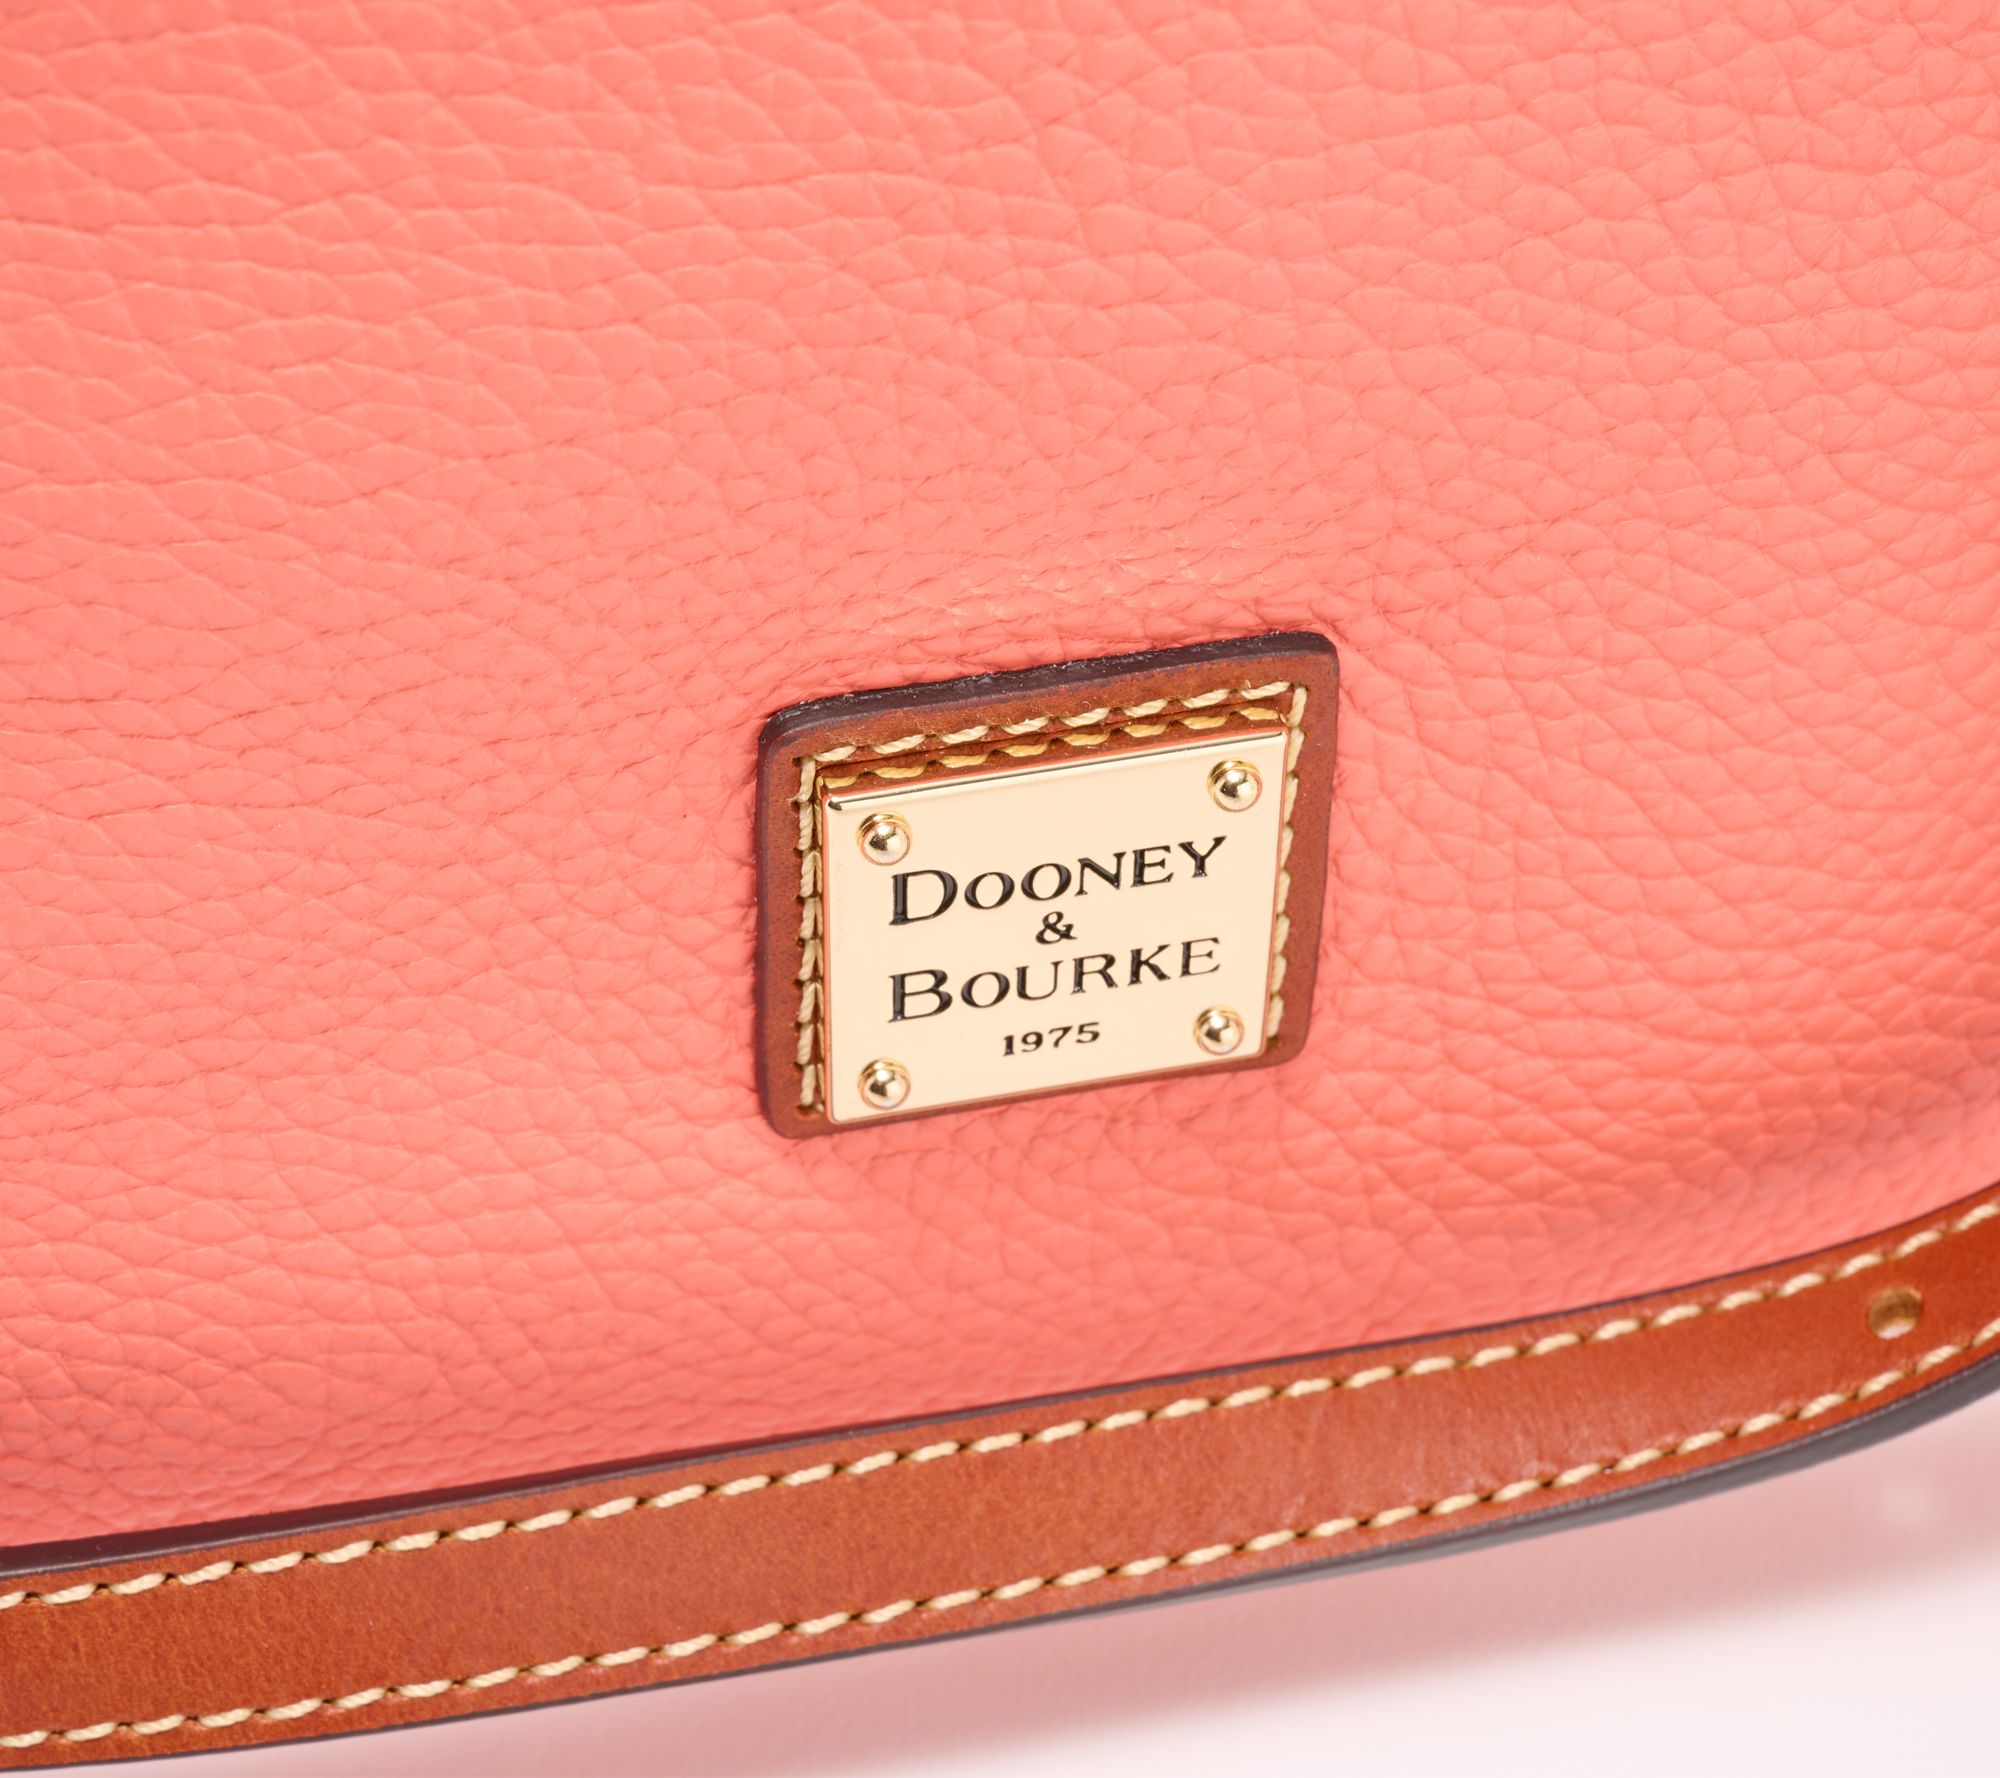 Dooney & Bourke Pebble Leather Lexi Crossbody on QVC 